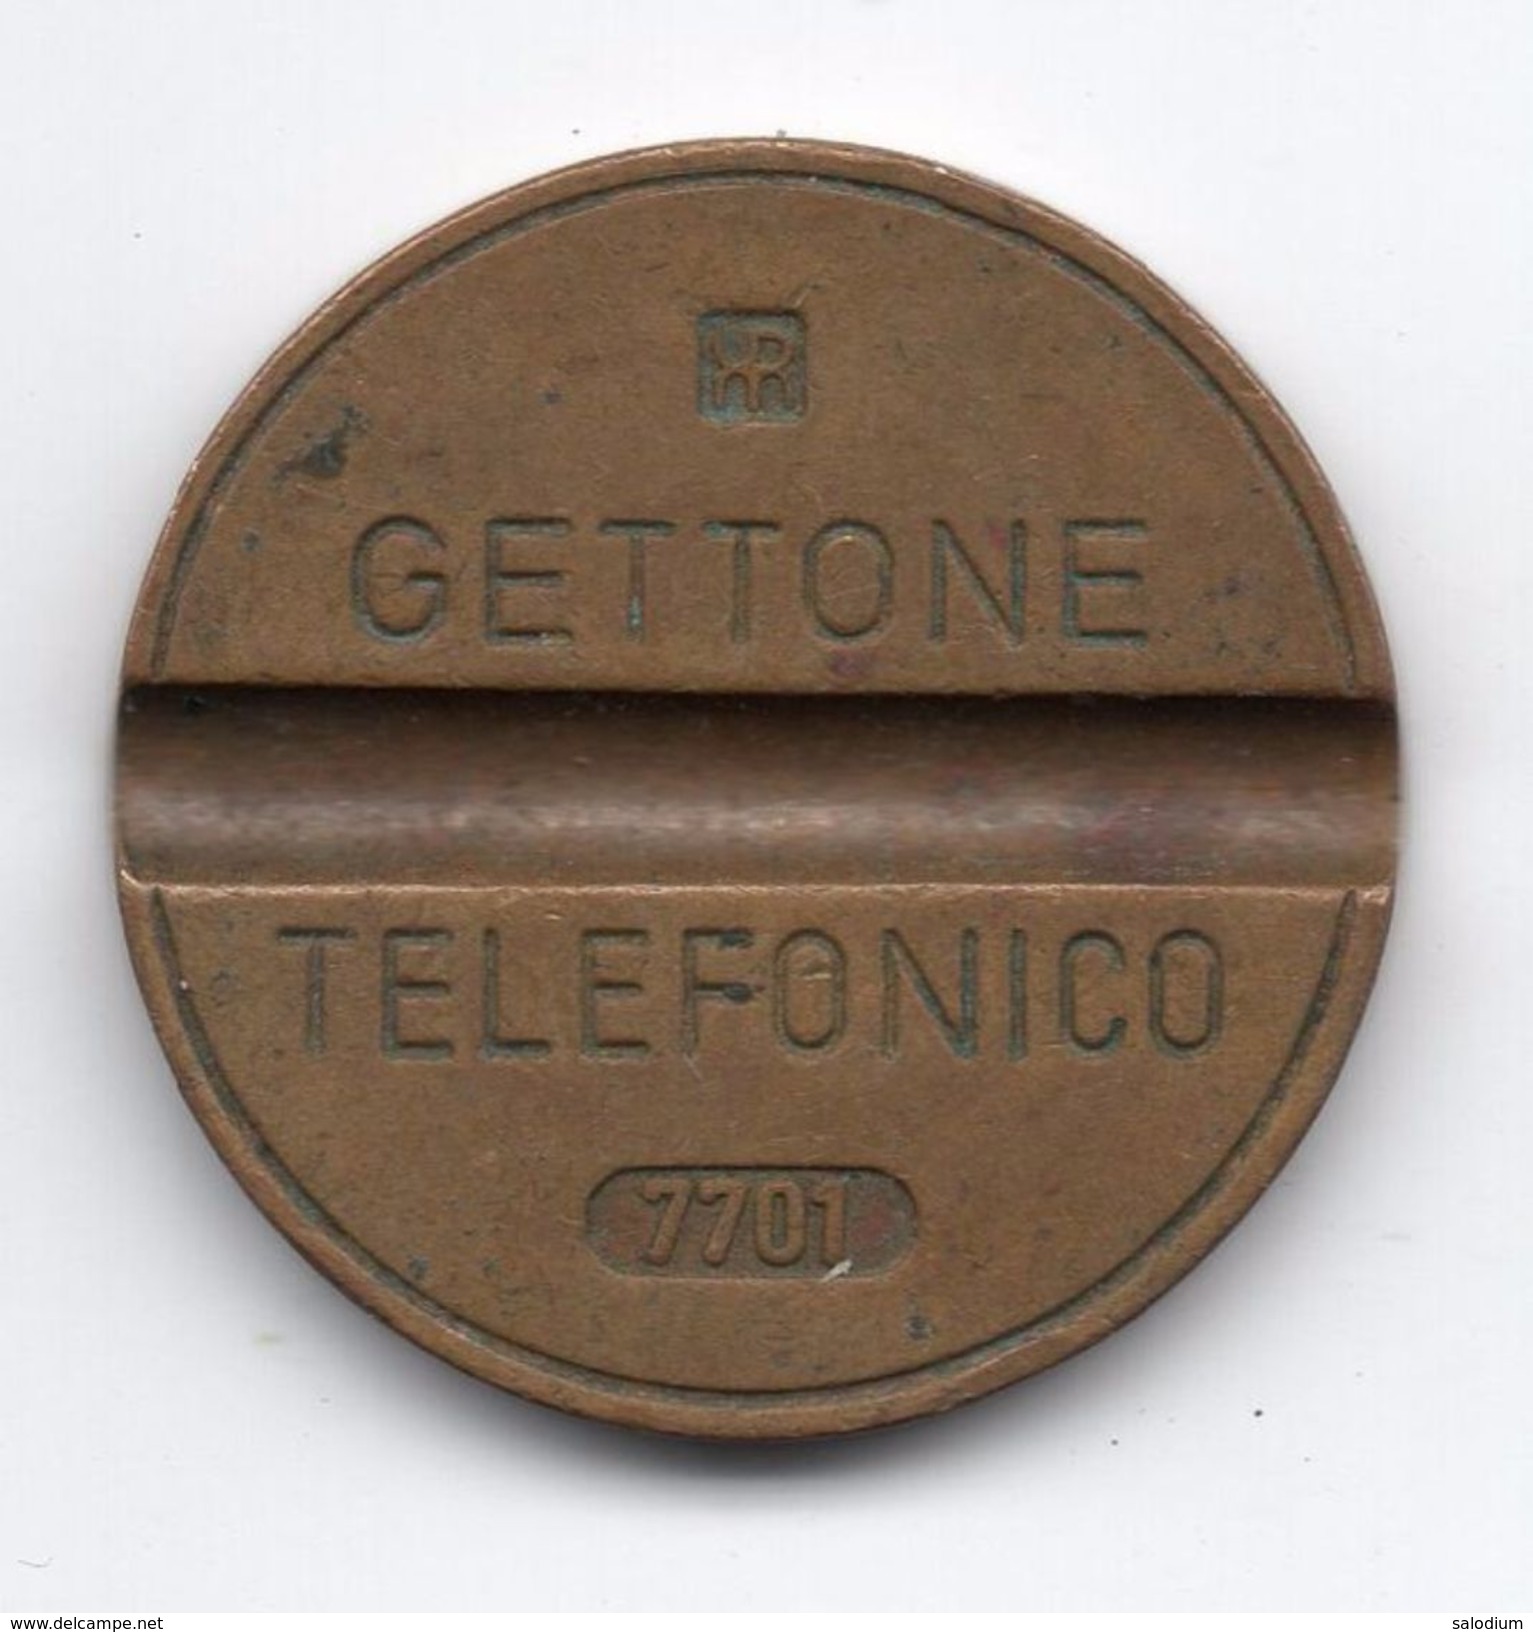 Gettone Telefonico 7701 Token Telephone - (Id-774) - Firma's